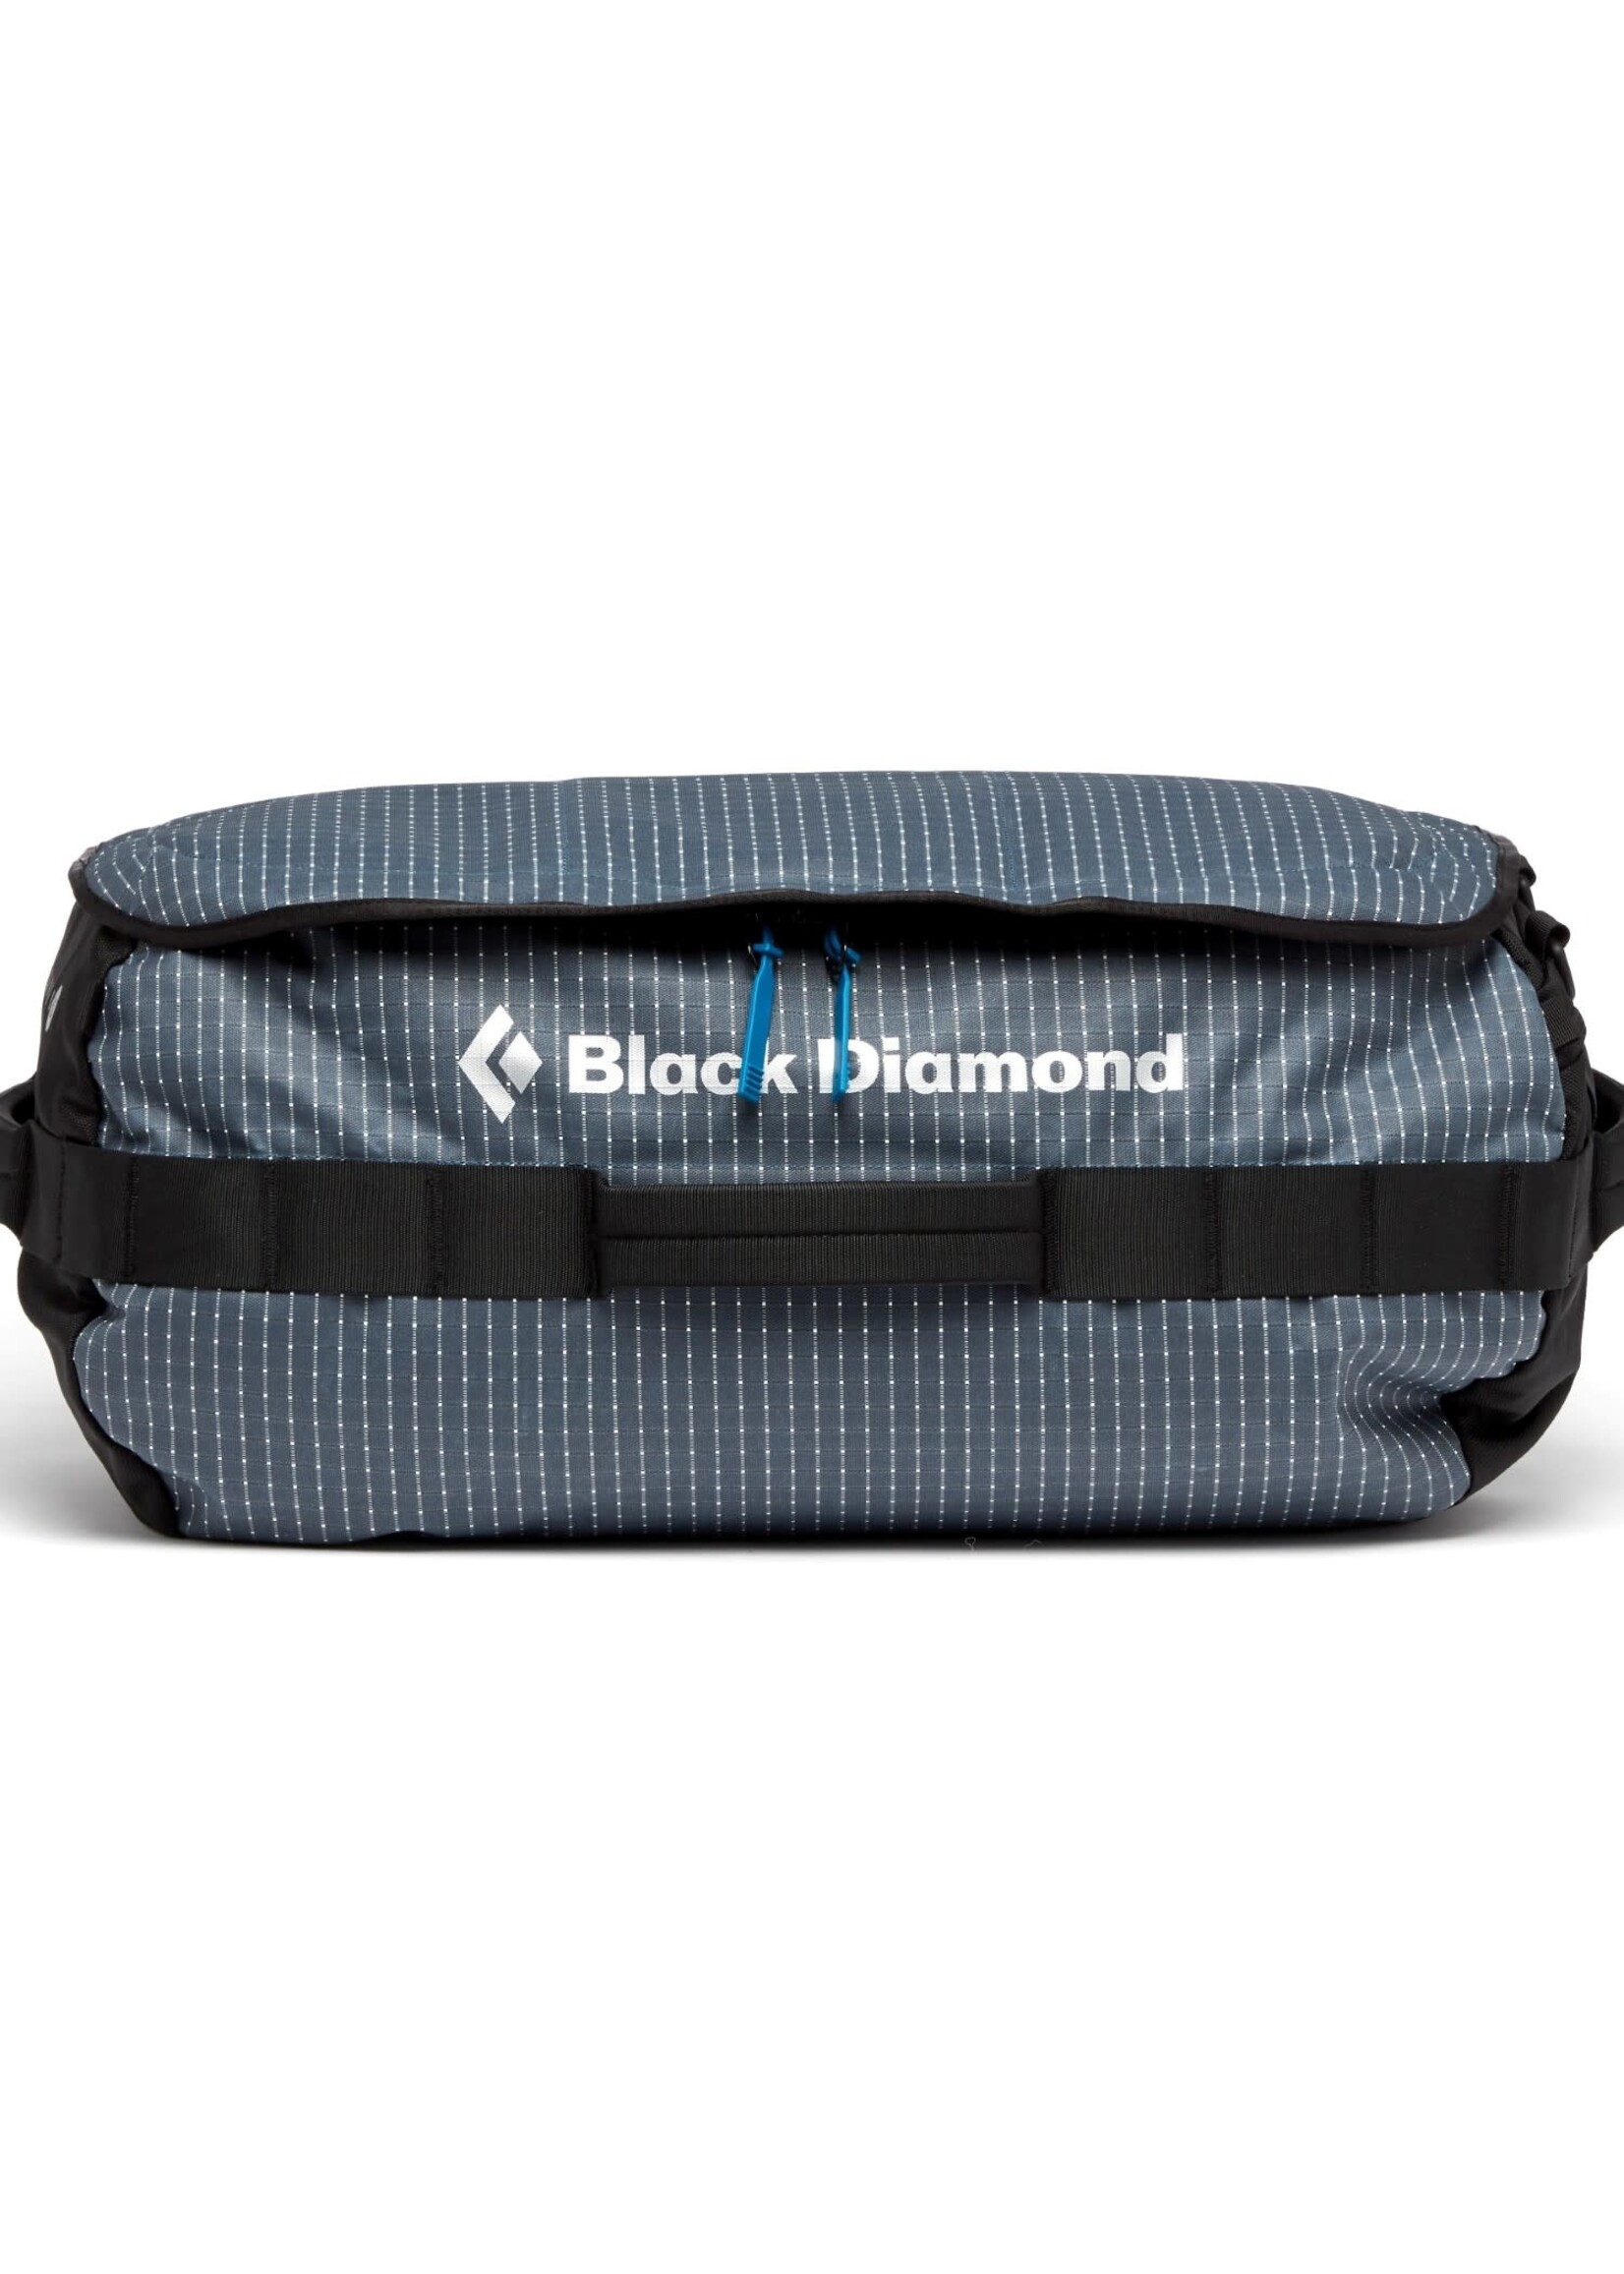 Black Diamond Black Diamond Stonehauler 60L Duffel Bag